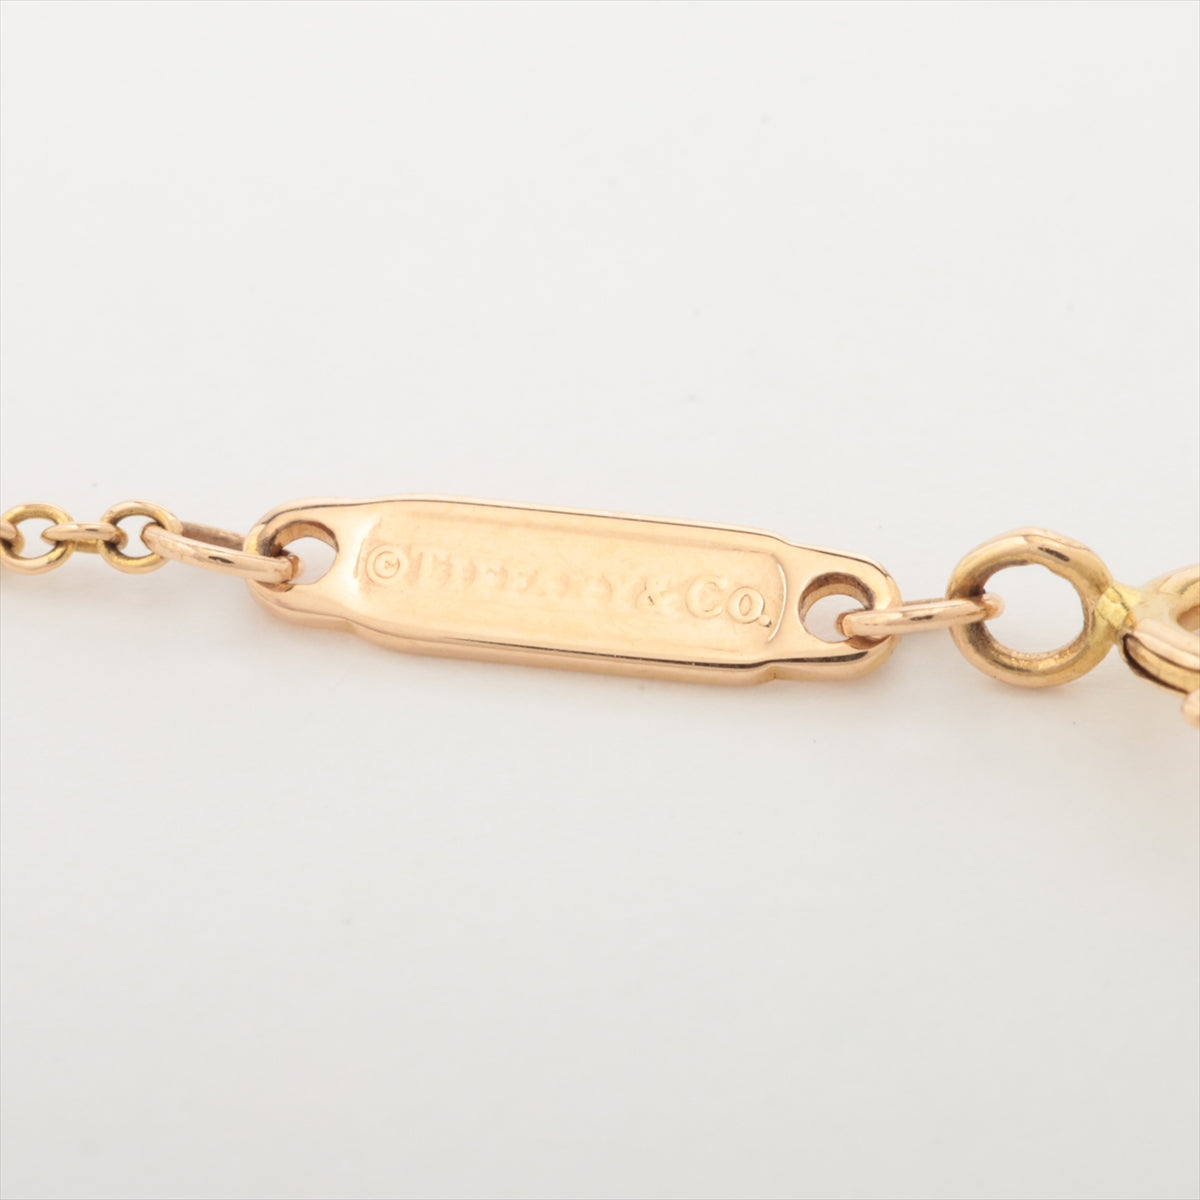 Tiffany T Smile Micro diamond Necklace 750(YG) 2.2g